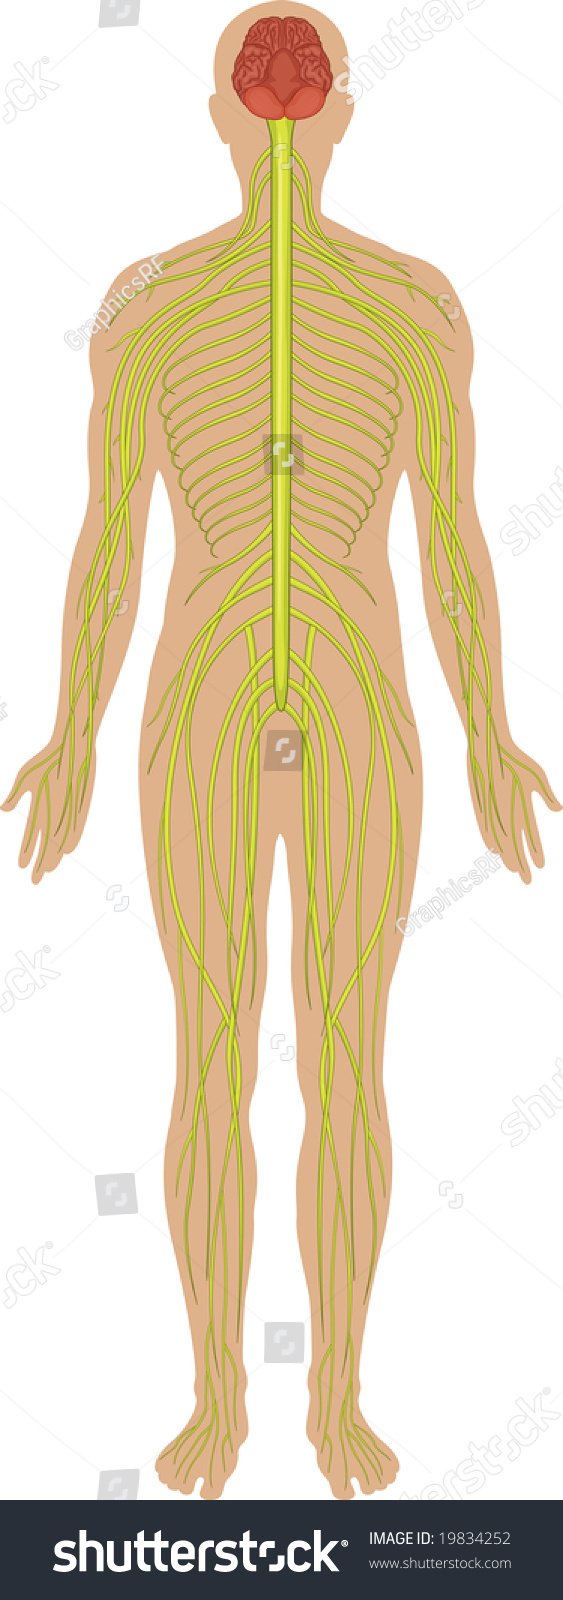 Detailed Illustration Of The Nervous System - 19834252 : Shutterstock